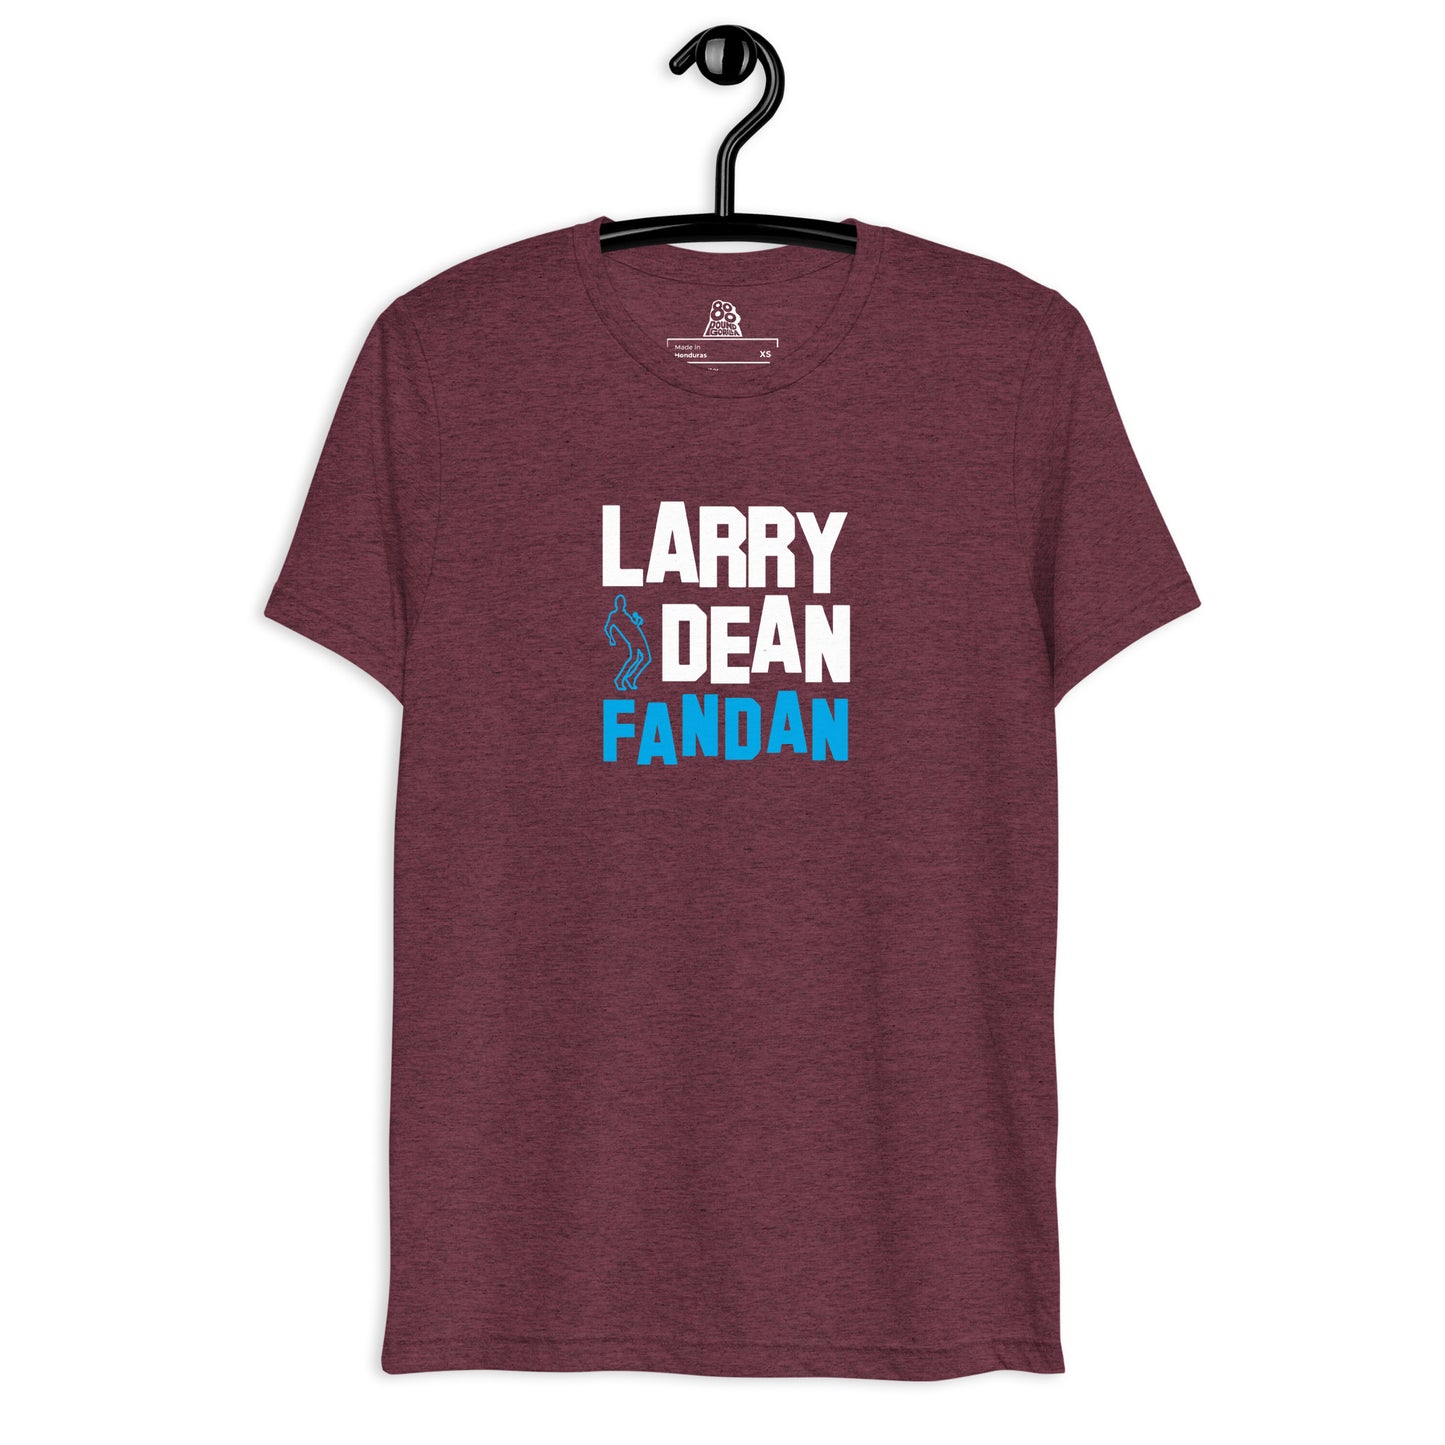 Larry Dean - Fandan - Short sleeve t-shirt